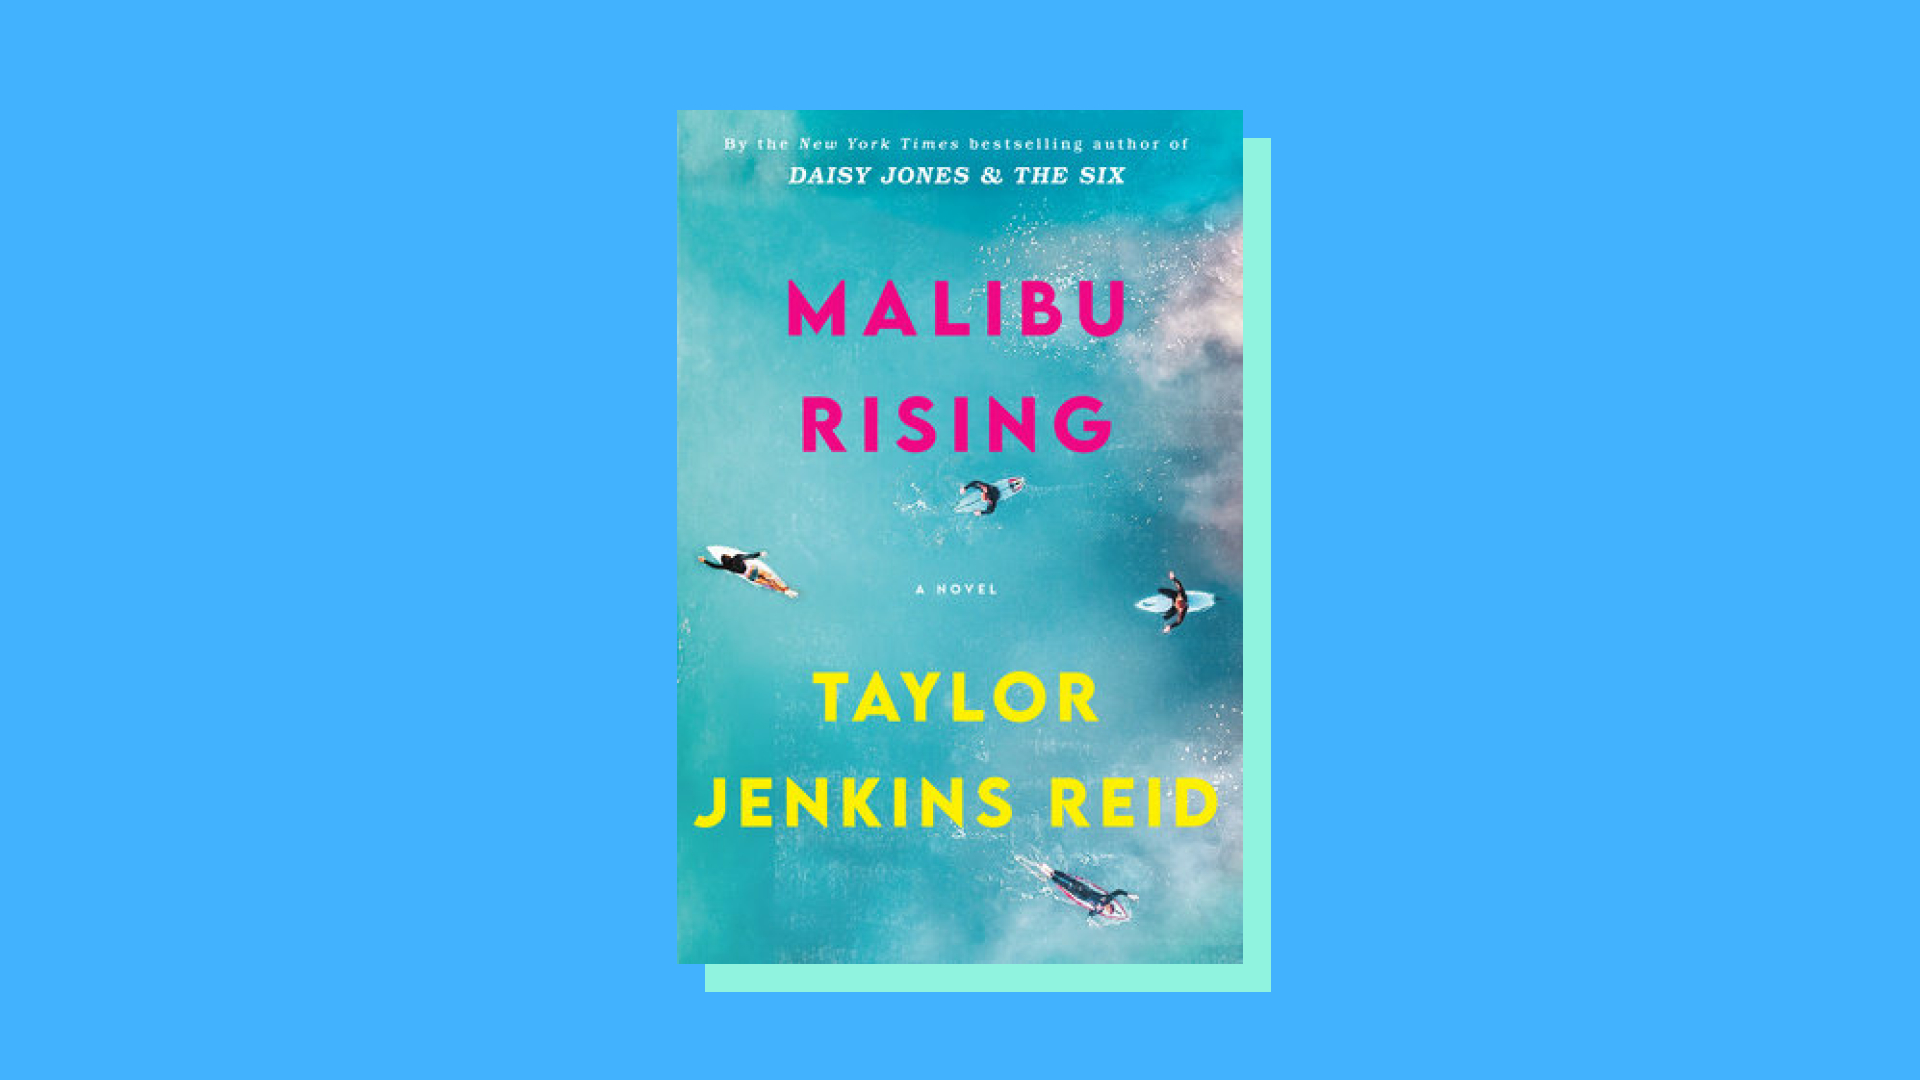 “Malibu Rising” by Taylor Jenkins Reid